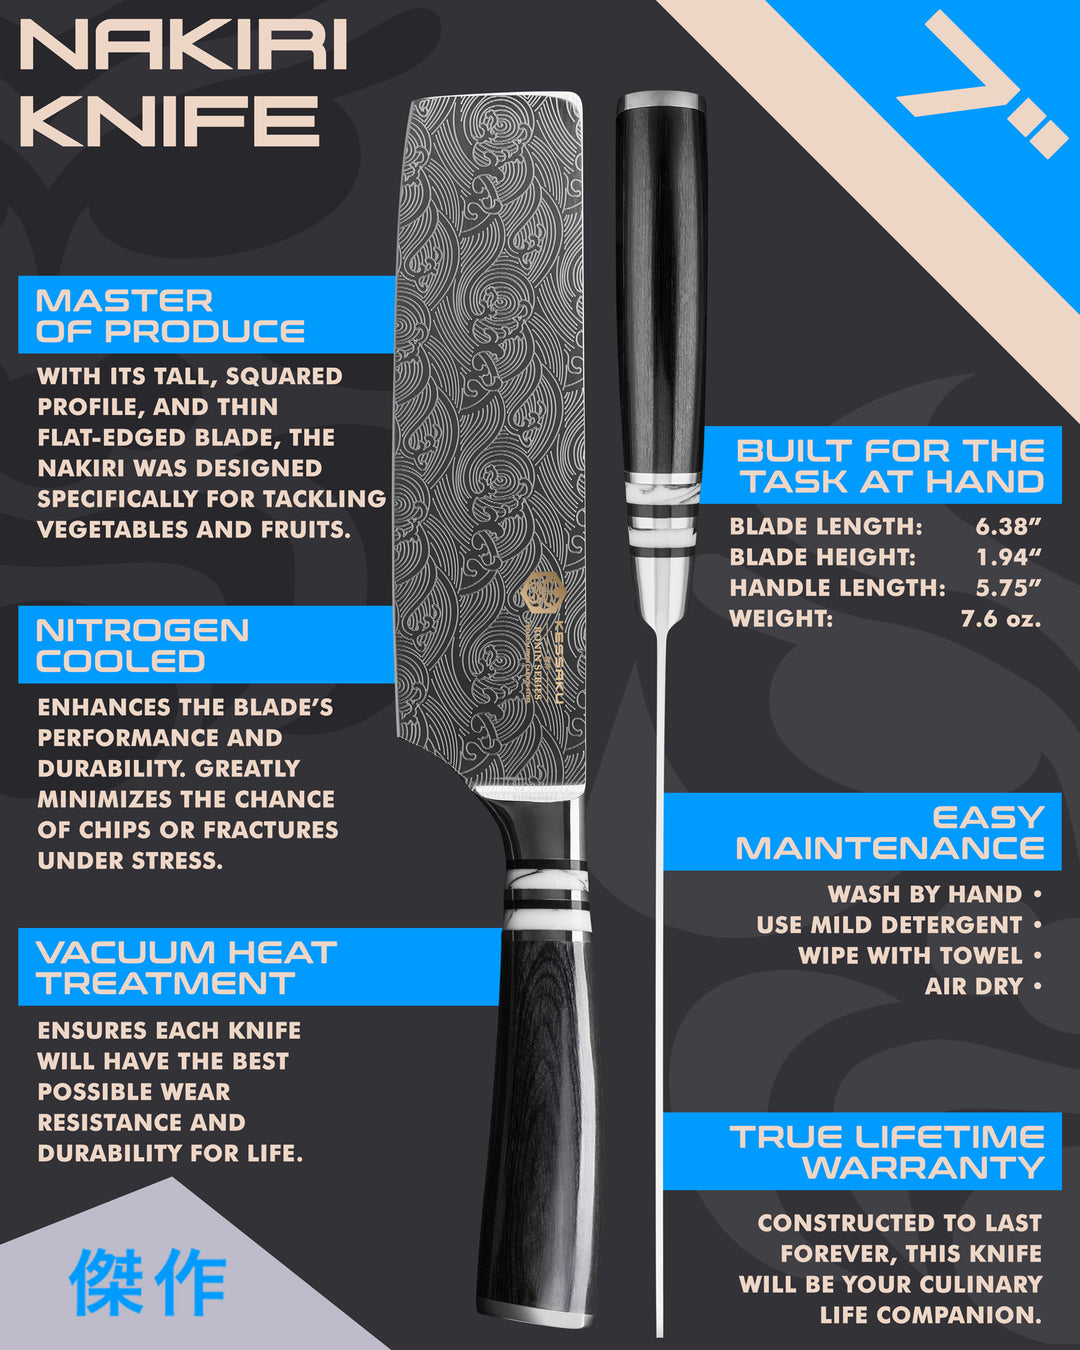 Kessaku Ronin Series Nakiri Knife uses, dimensions, maintenance, warranty info, and additional blade treatments